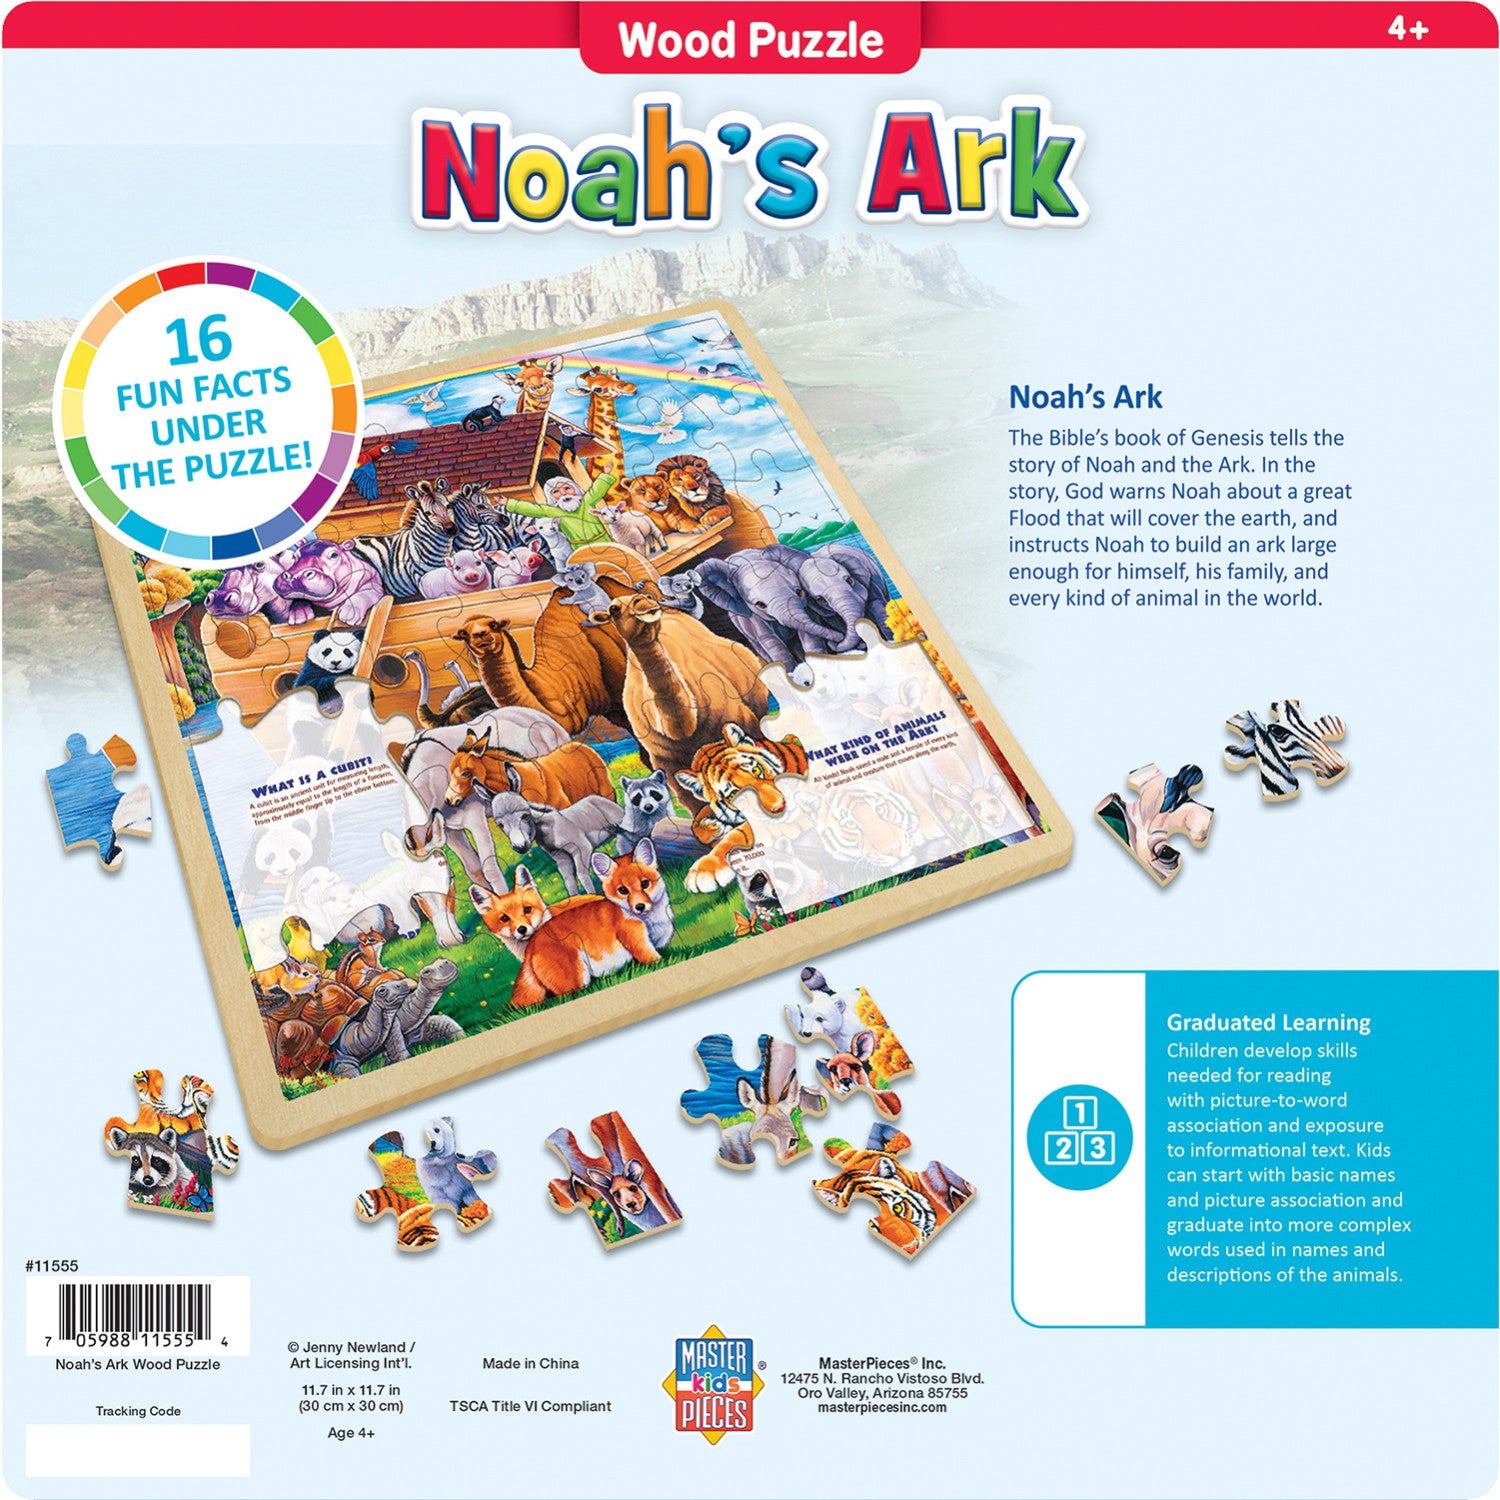 Wood Fun Facts - Noah's Ark 48 Piece Wood Puzzle